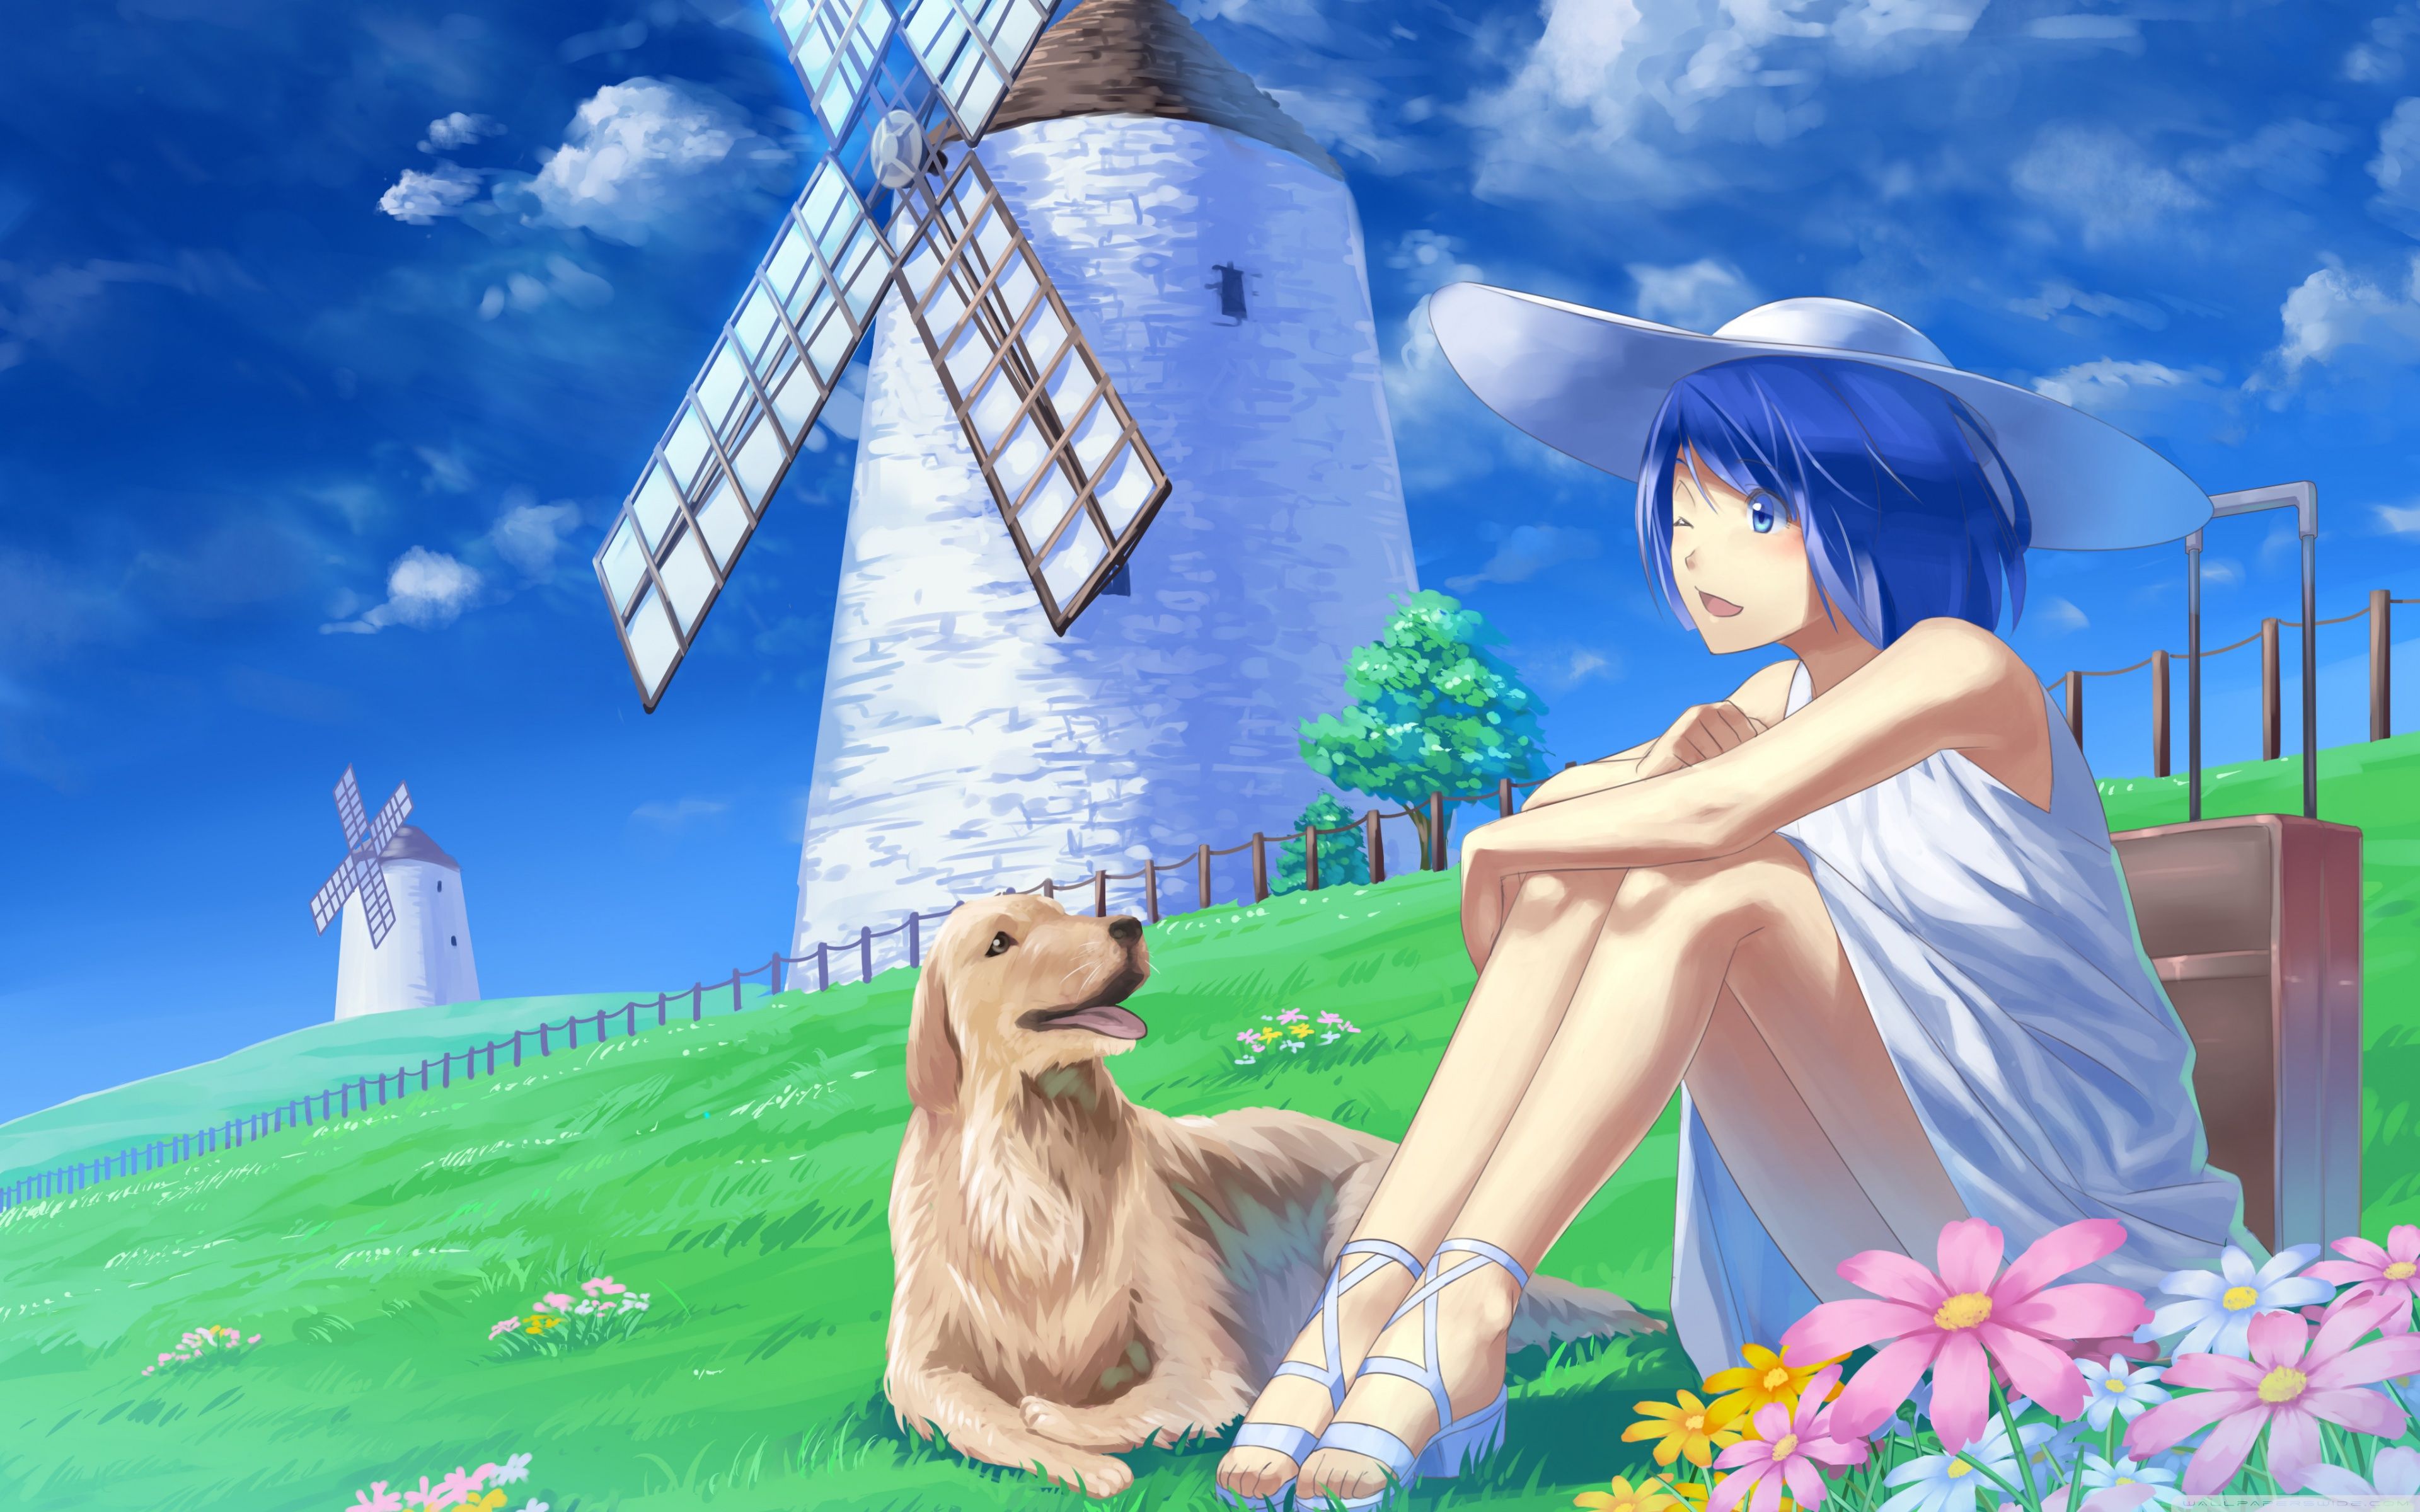 Anime Girl With Her Pet Dog Ultra HD Desktop Background Wallpaper for 4K UHD TV, Widescreen & UltraWide Desktop & Laptop, Tablet